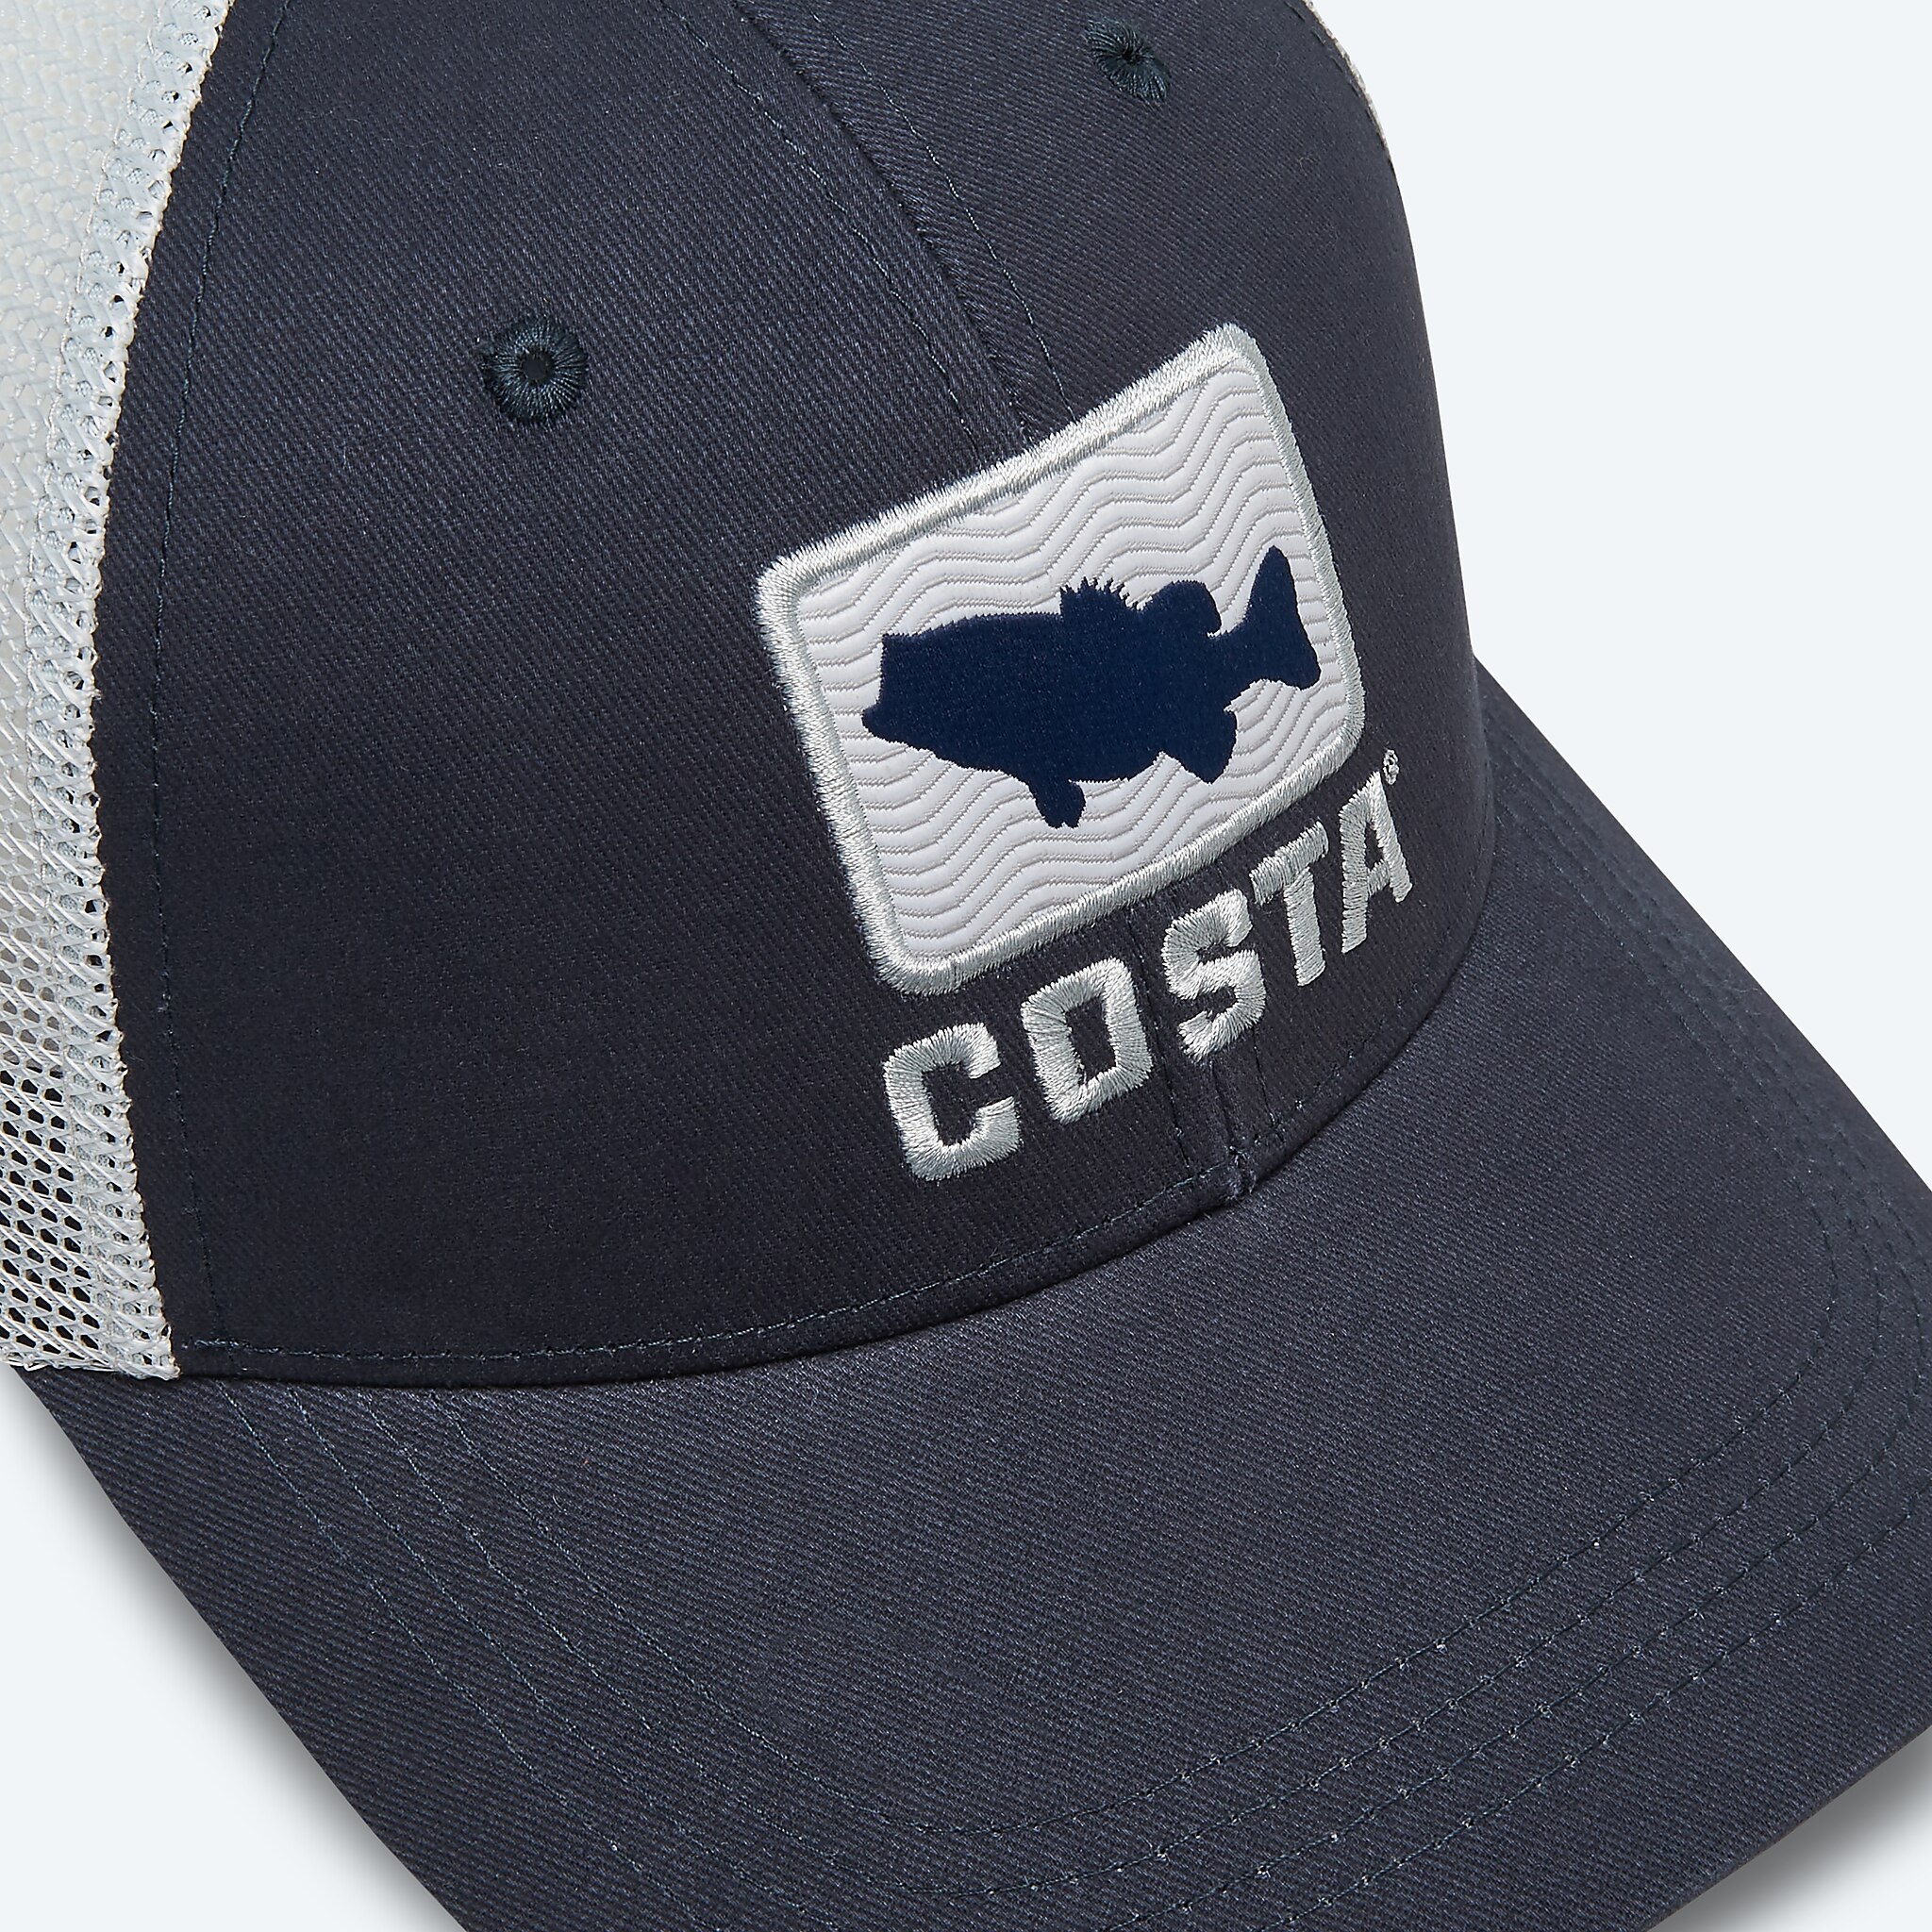 Costa Del Mar Bass Waves Trucker Cap, Grey, One Size US, Grey, One size